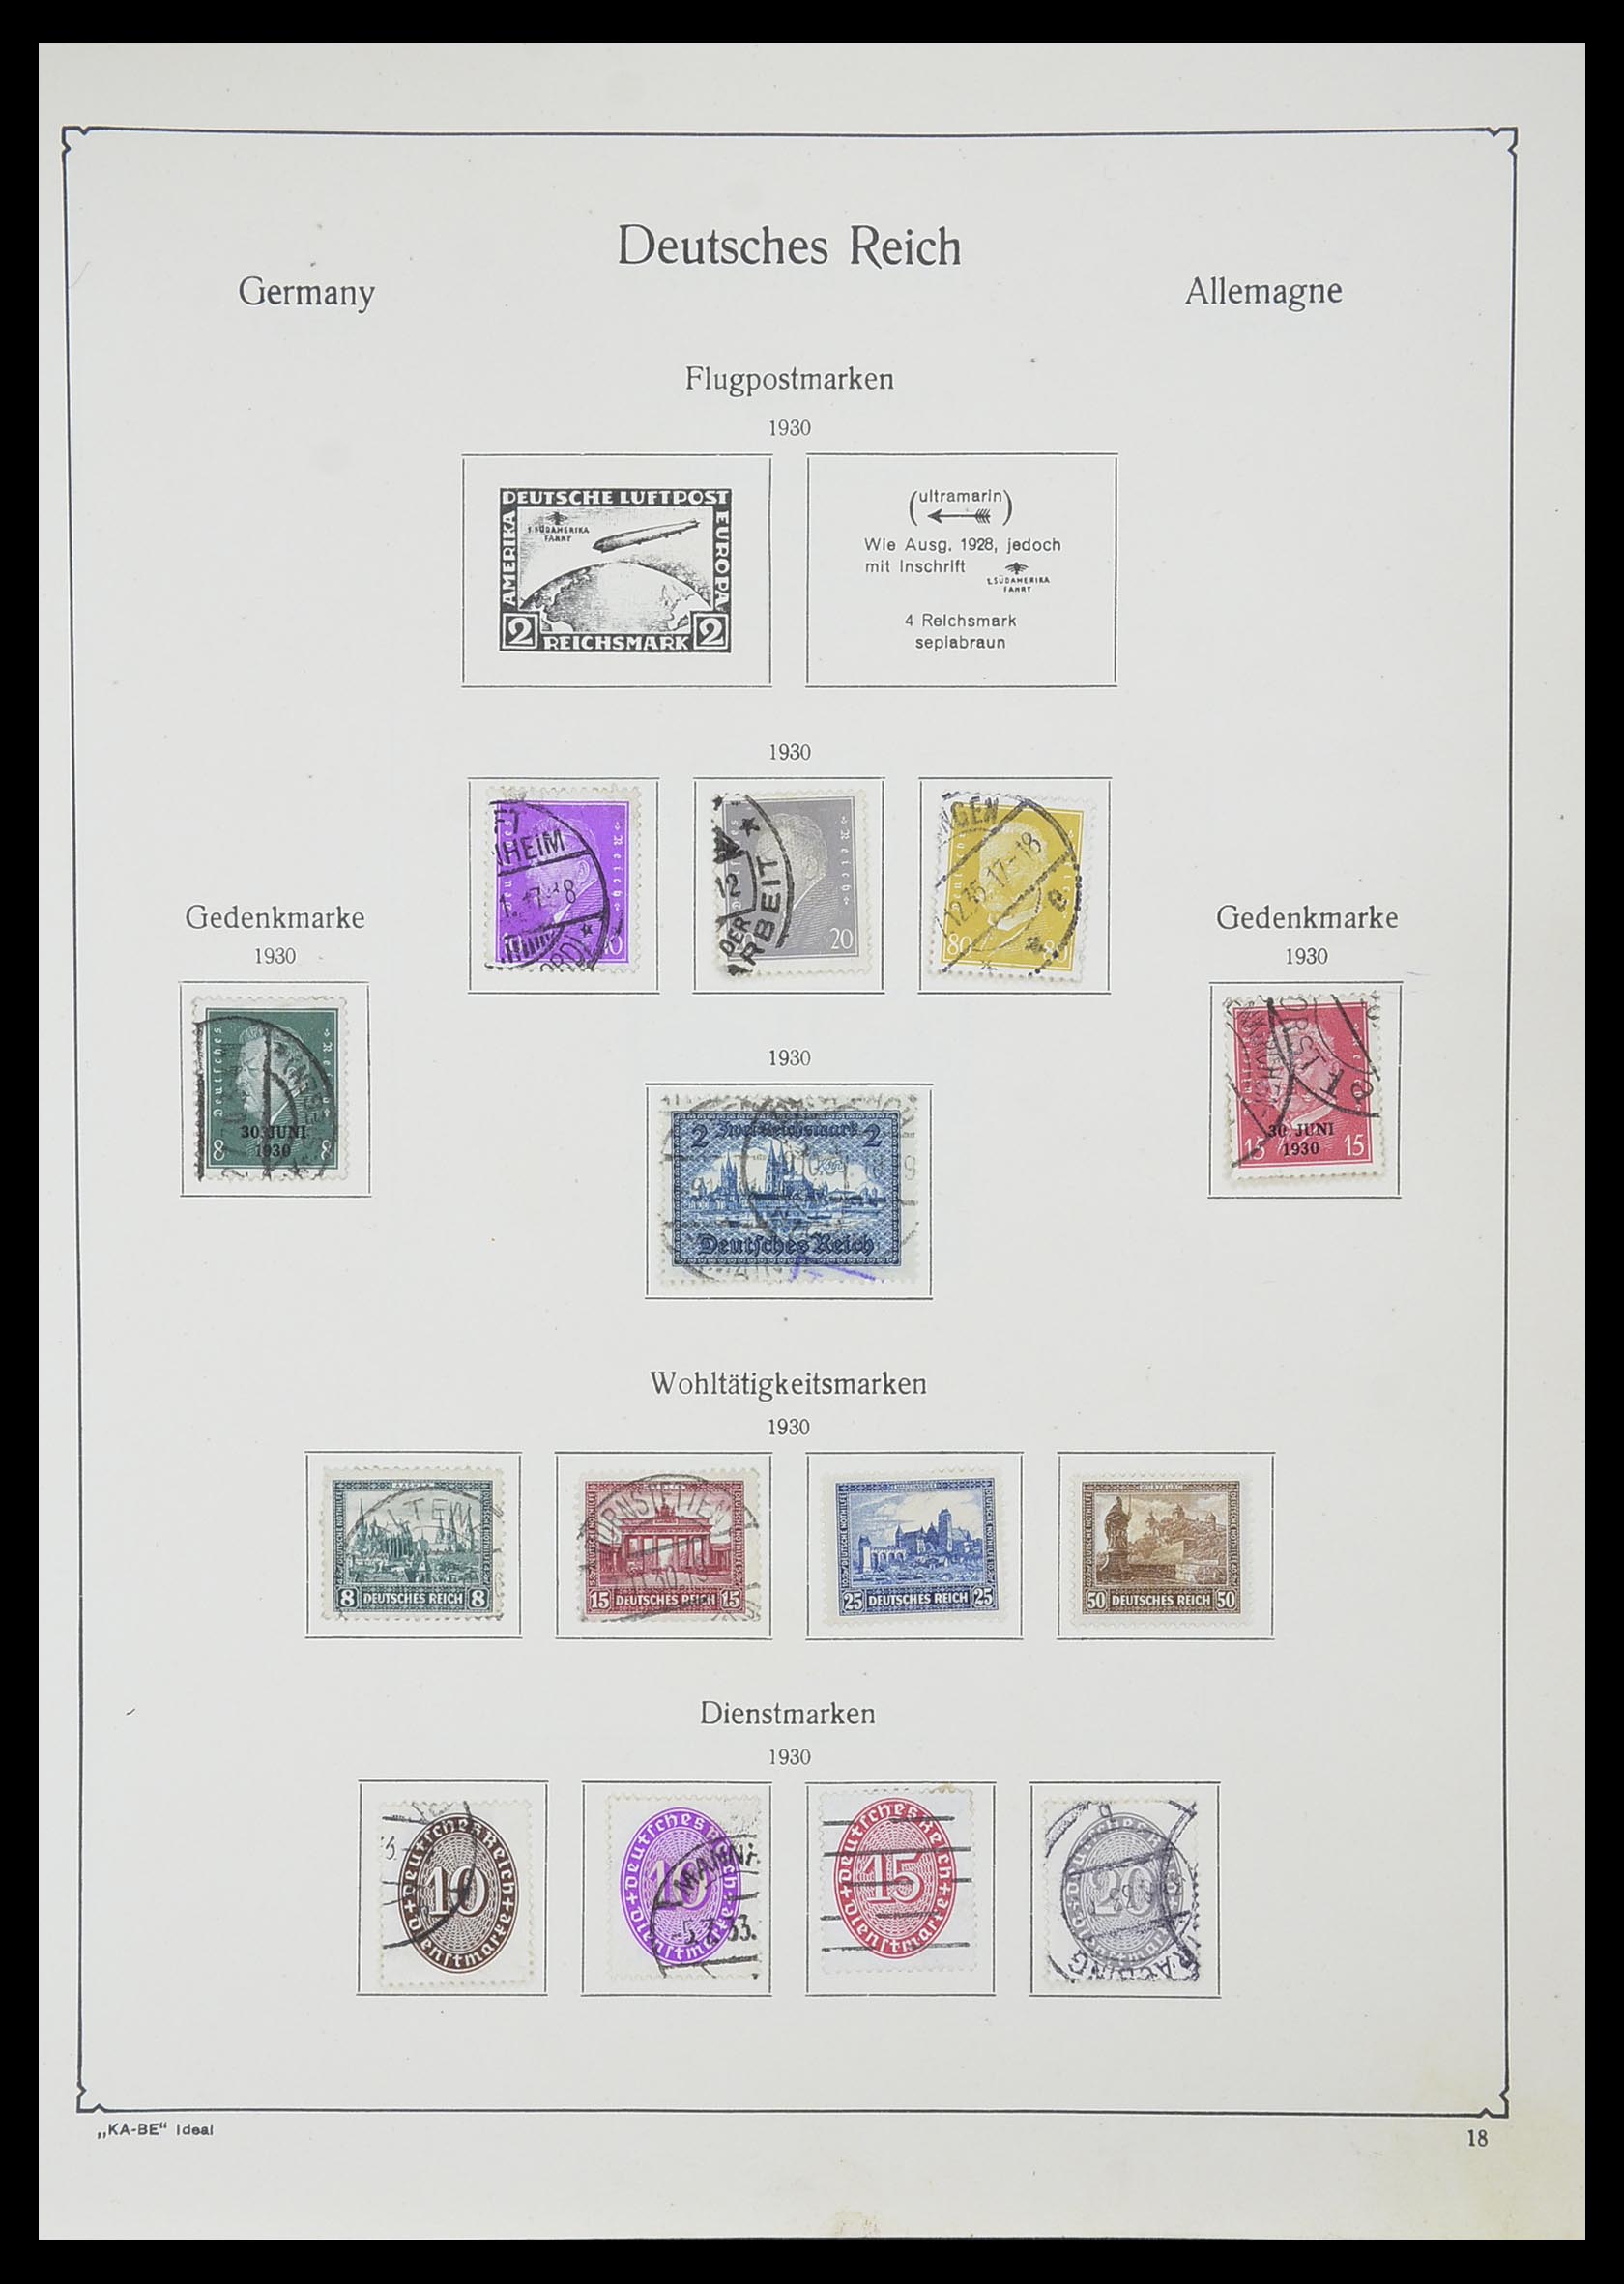 33359 023 - Stamp collection 33359 German Reich 1872-1945.